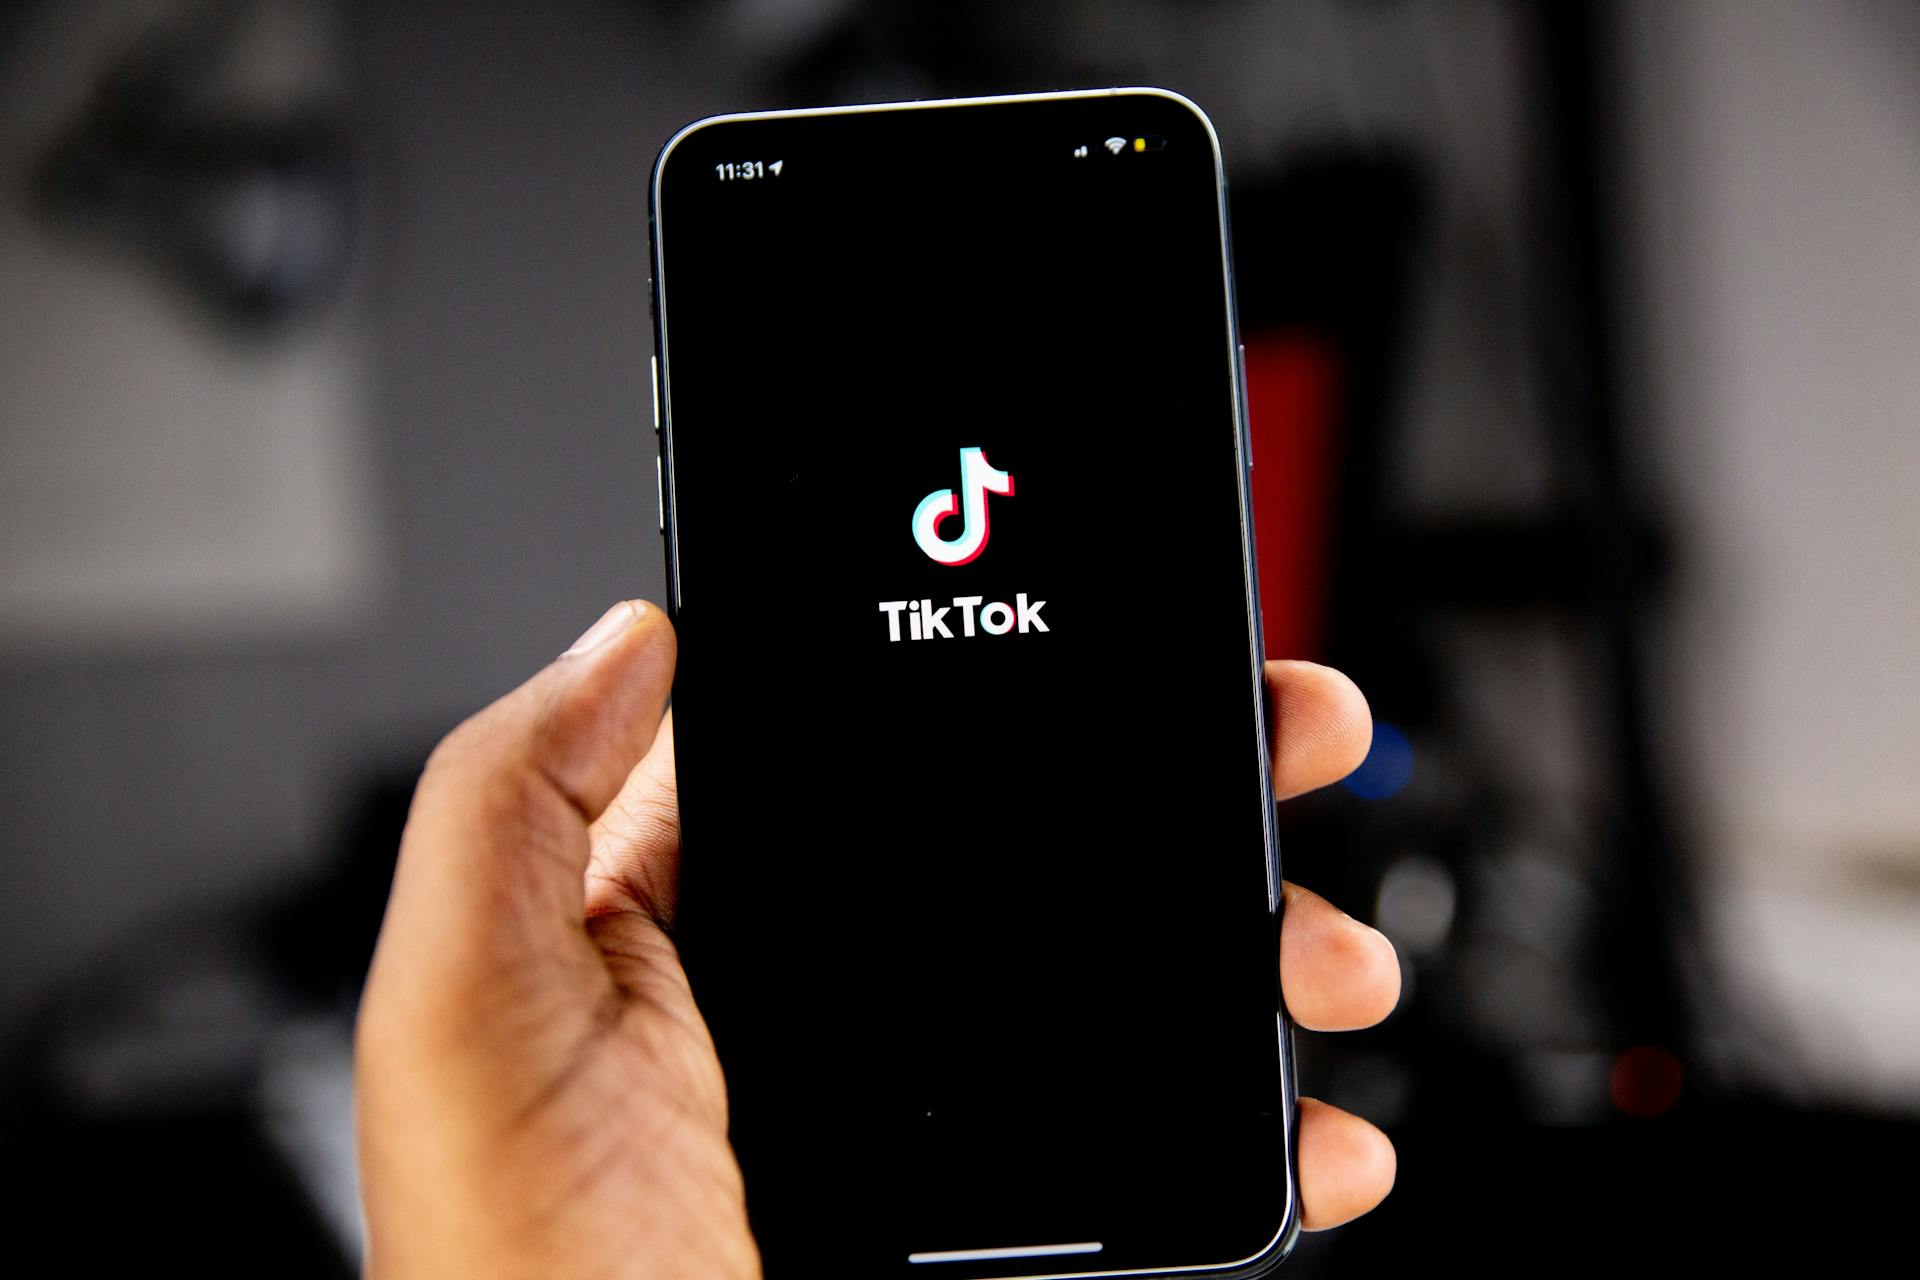 Person holding phone showing TikTok logo